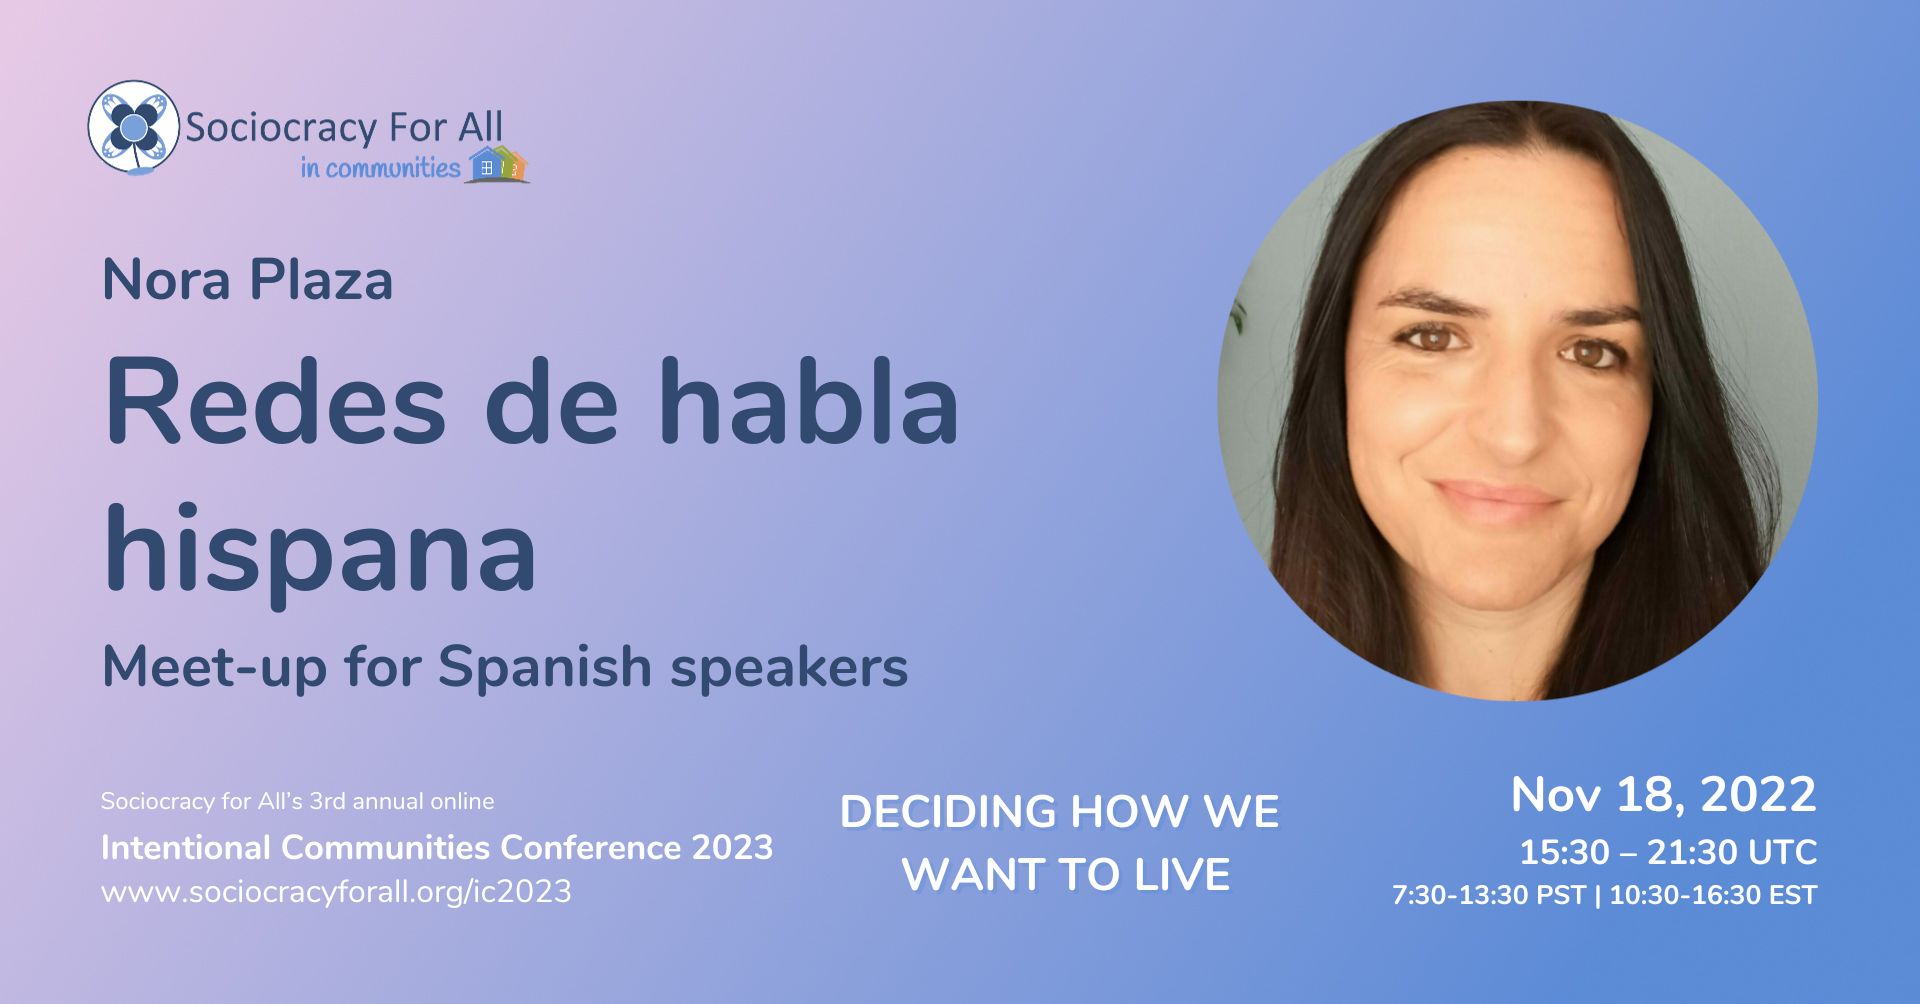 Redes de habla hispana (Meet-up for Spanish speakers)